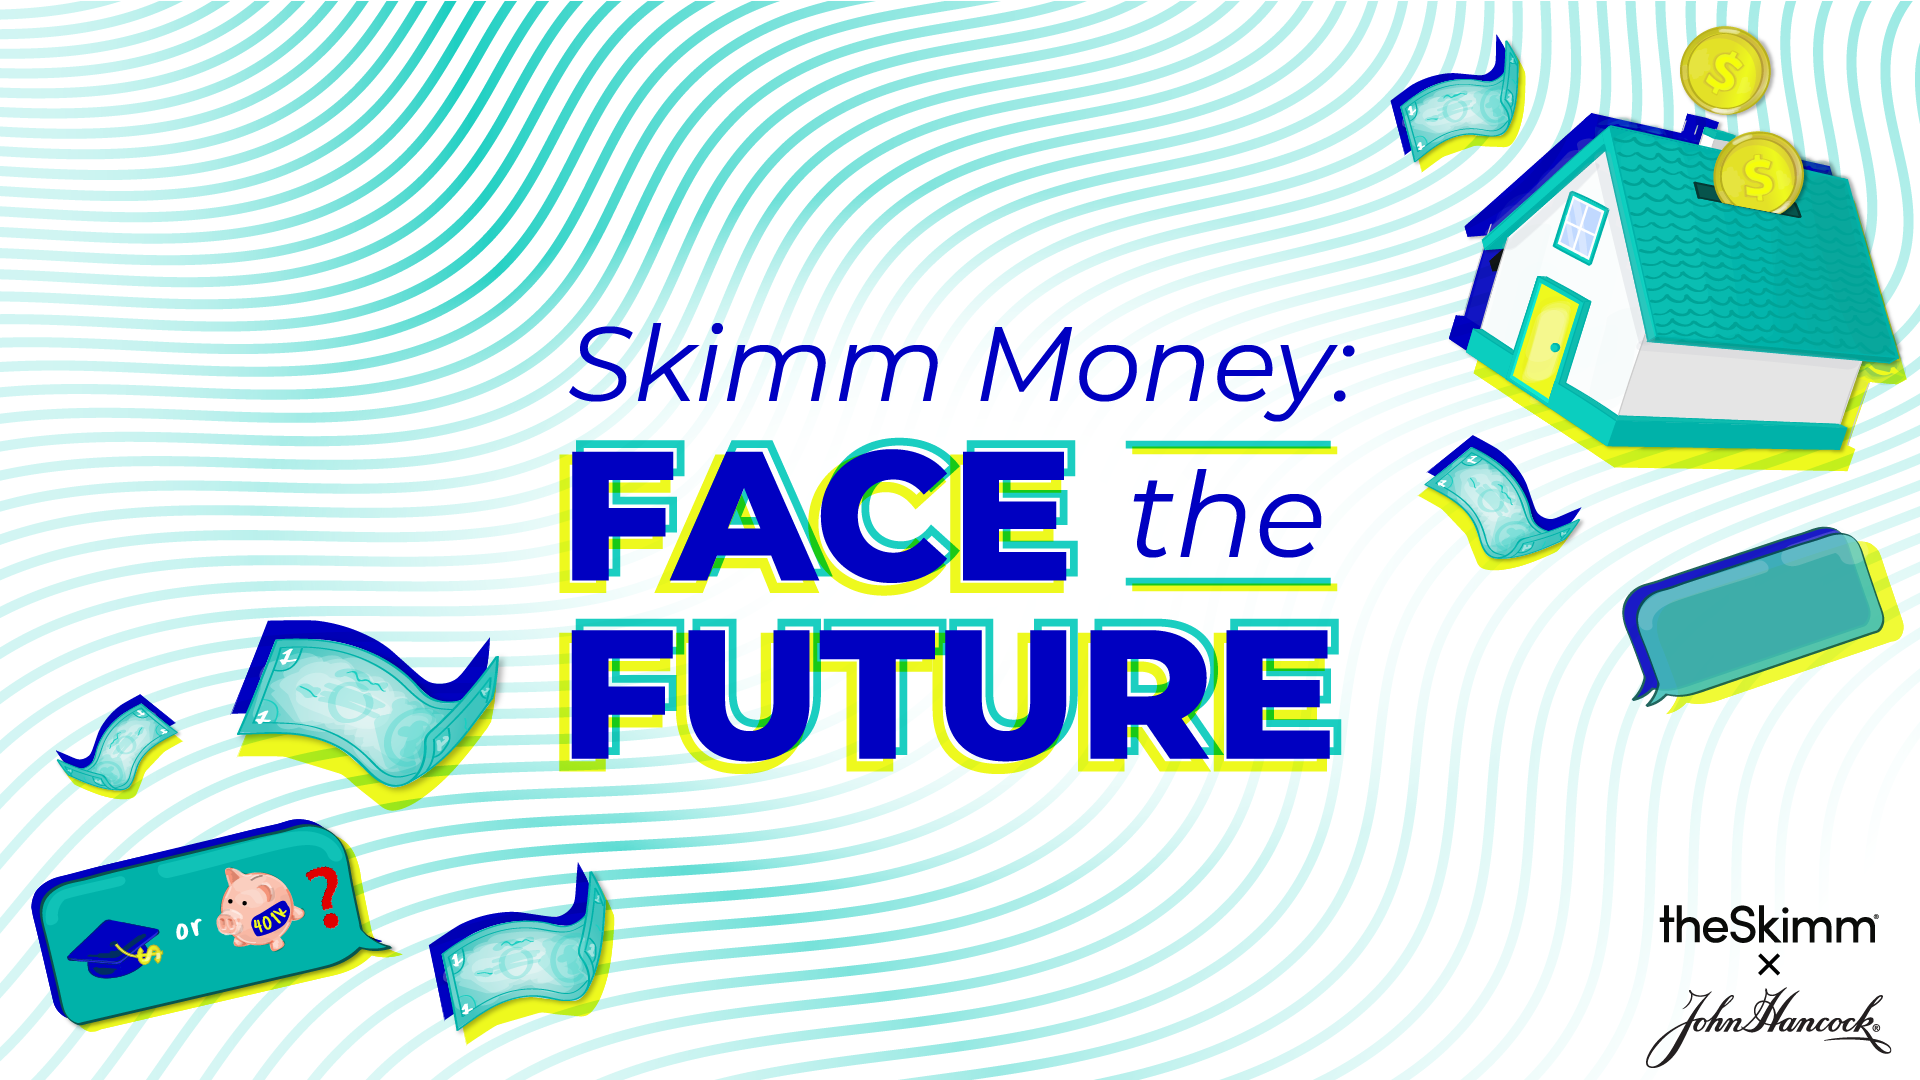 Skimm Money: Face the Future